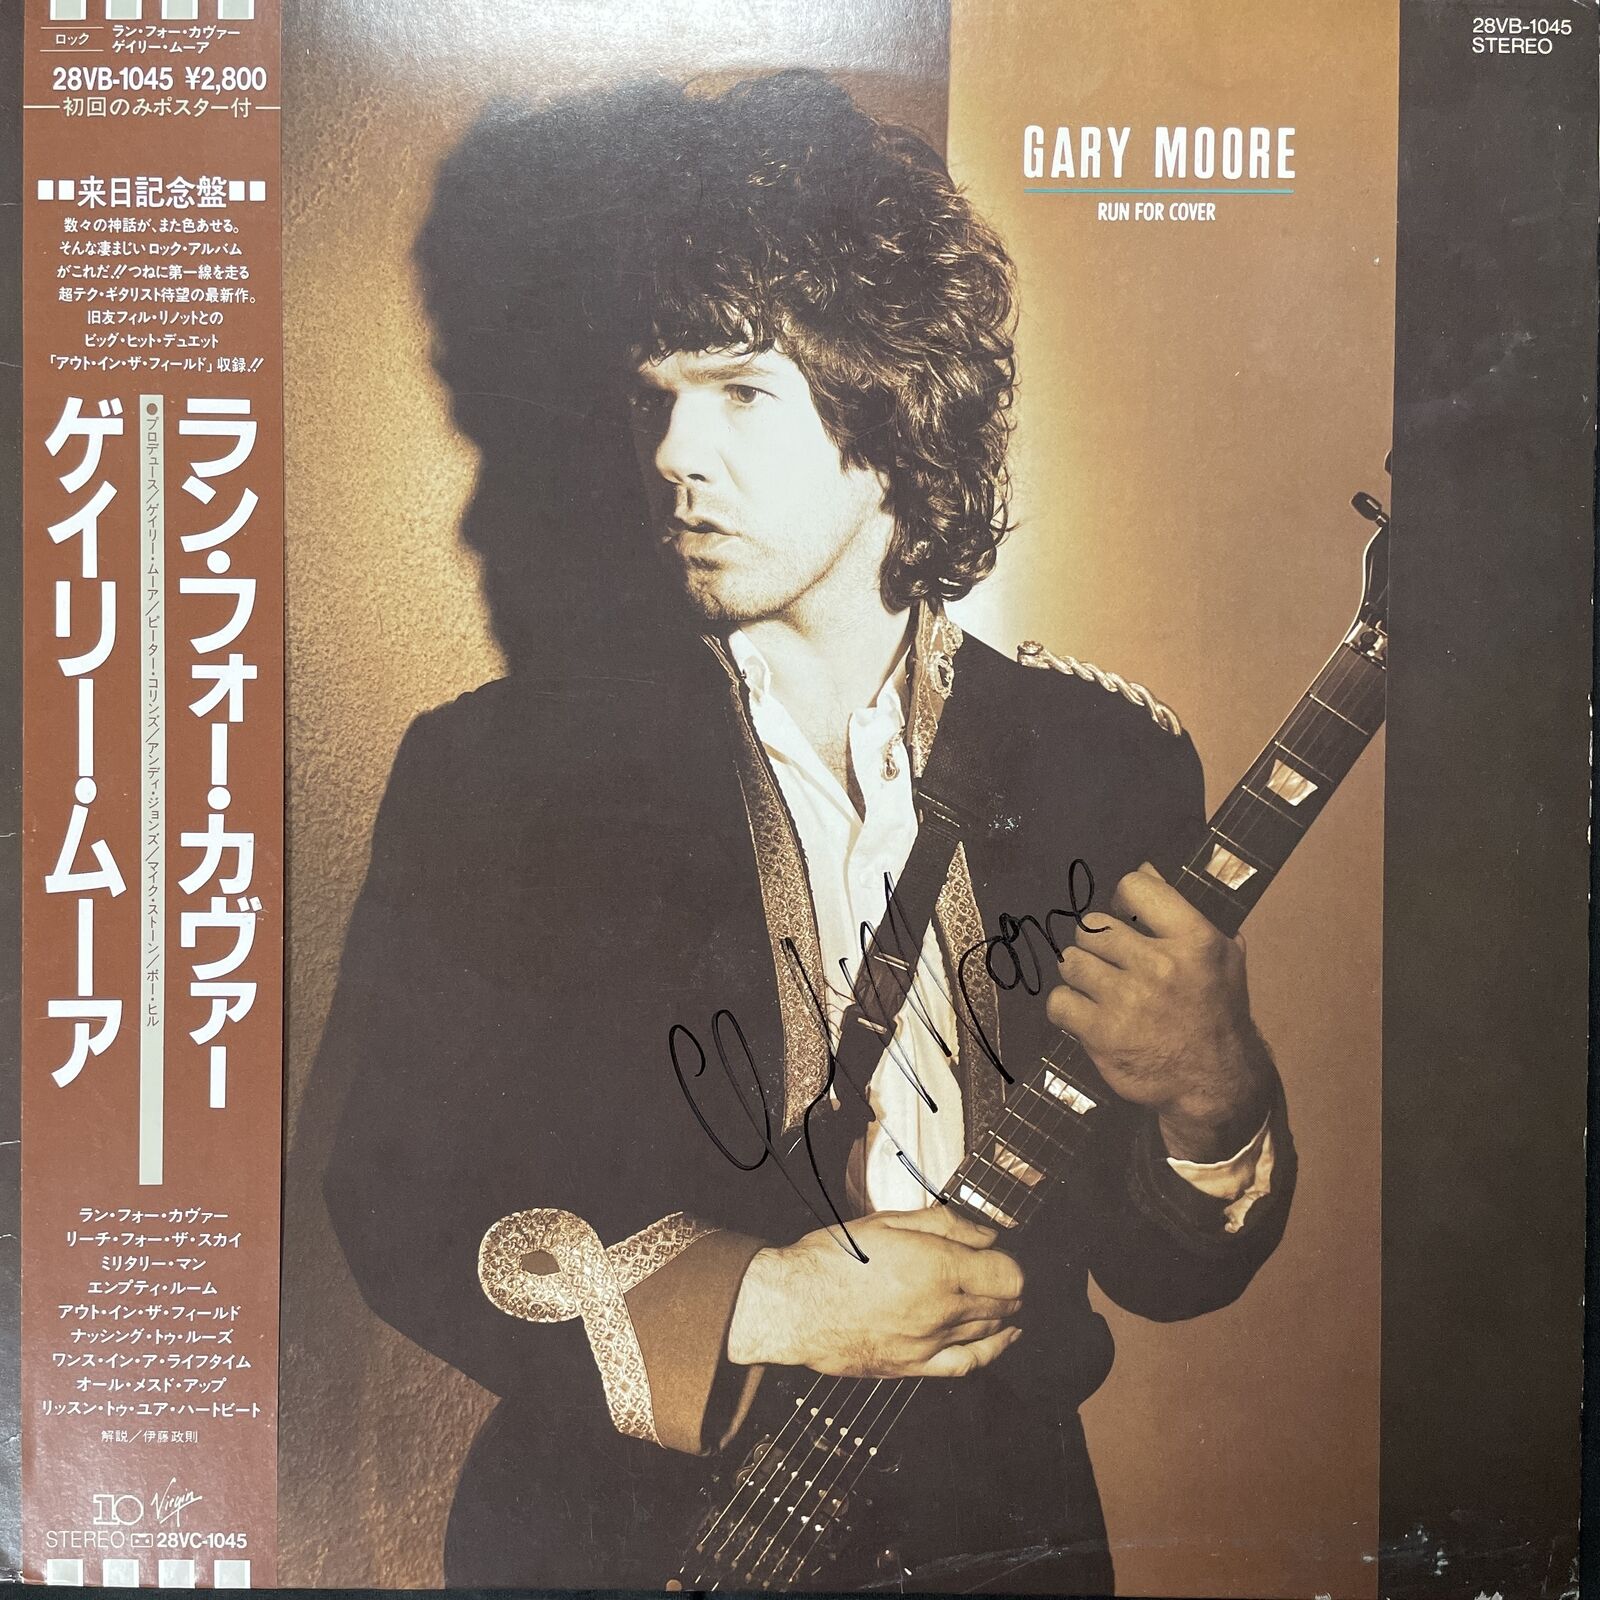 COA AUTOGRAPH Gary Moore VINYL LP JAPAN Signed